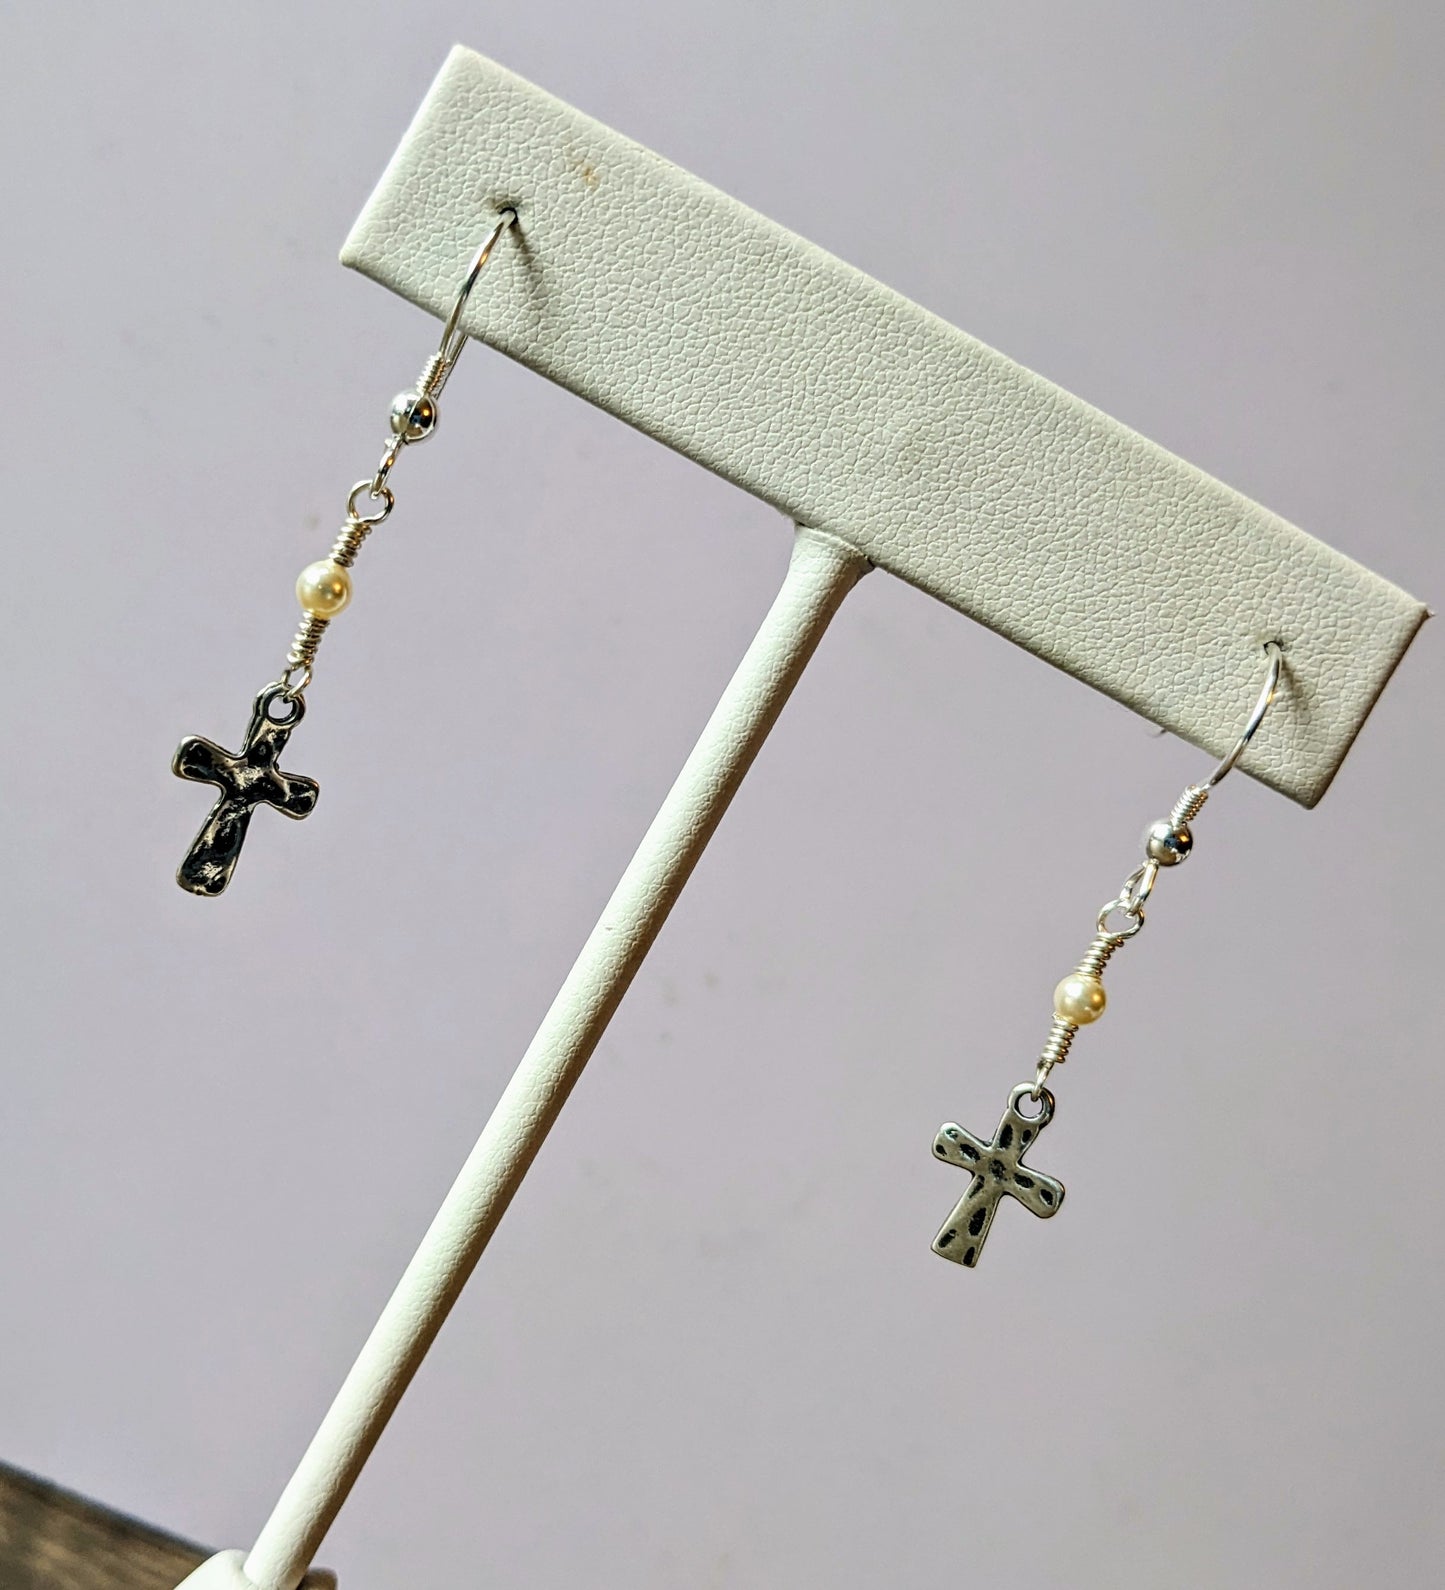 Dainty Cross Necklace